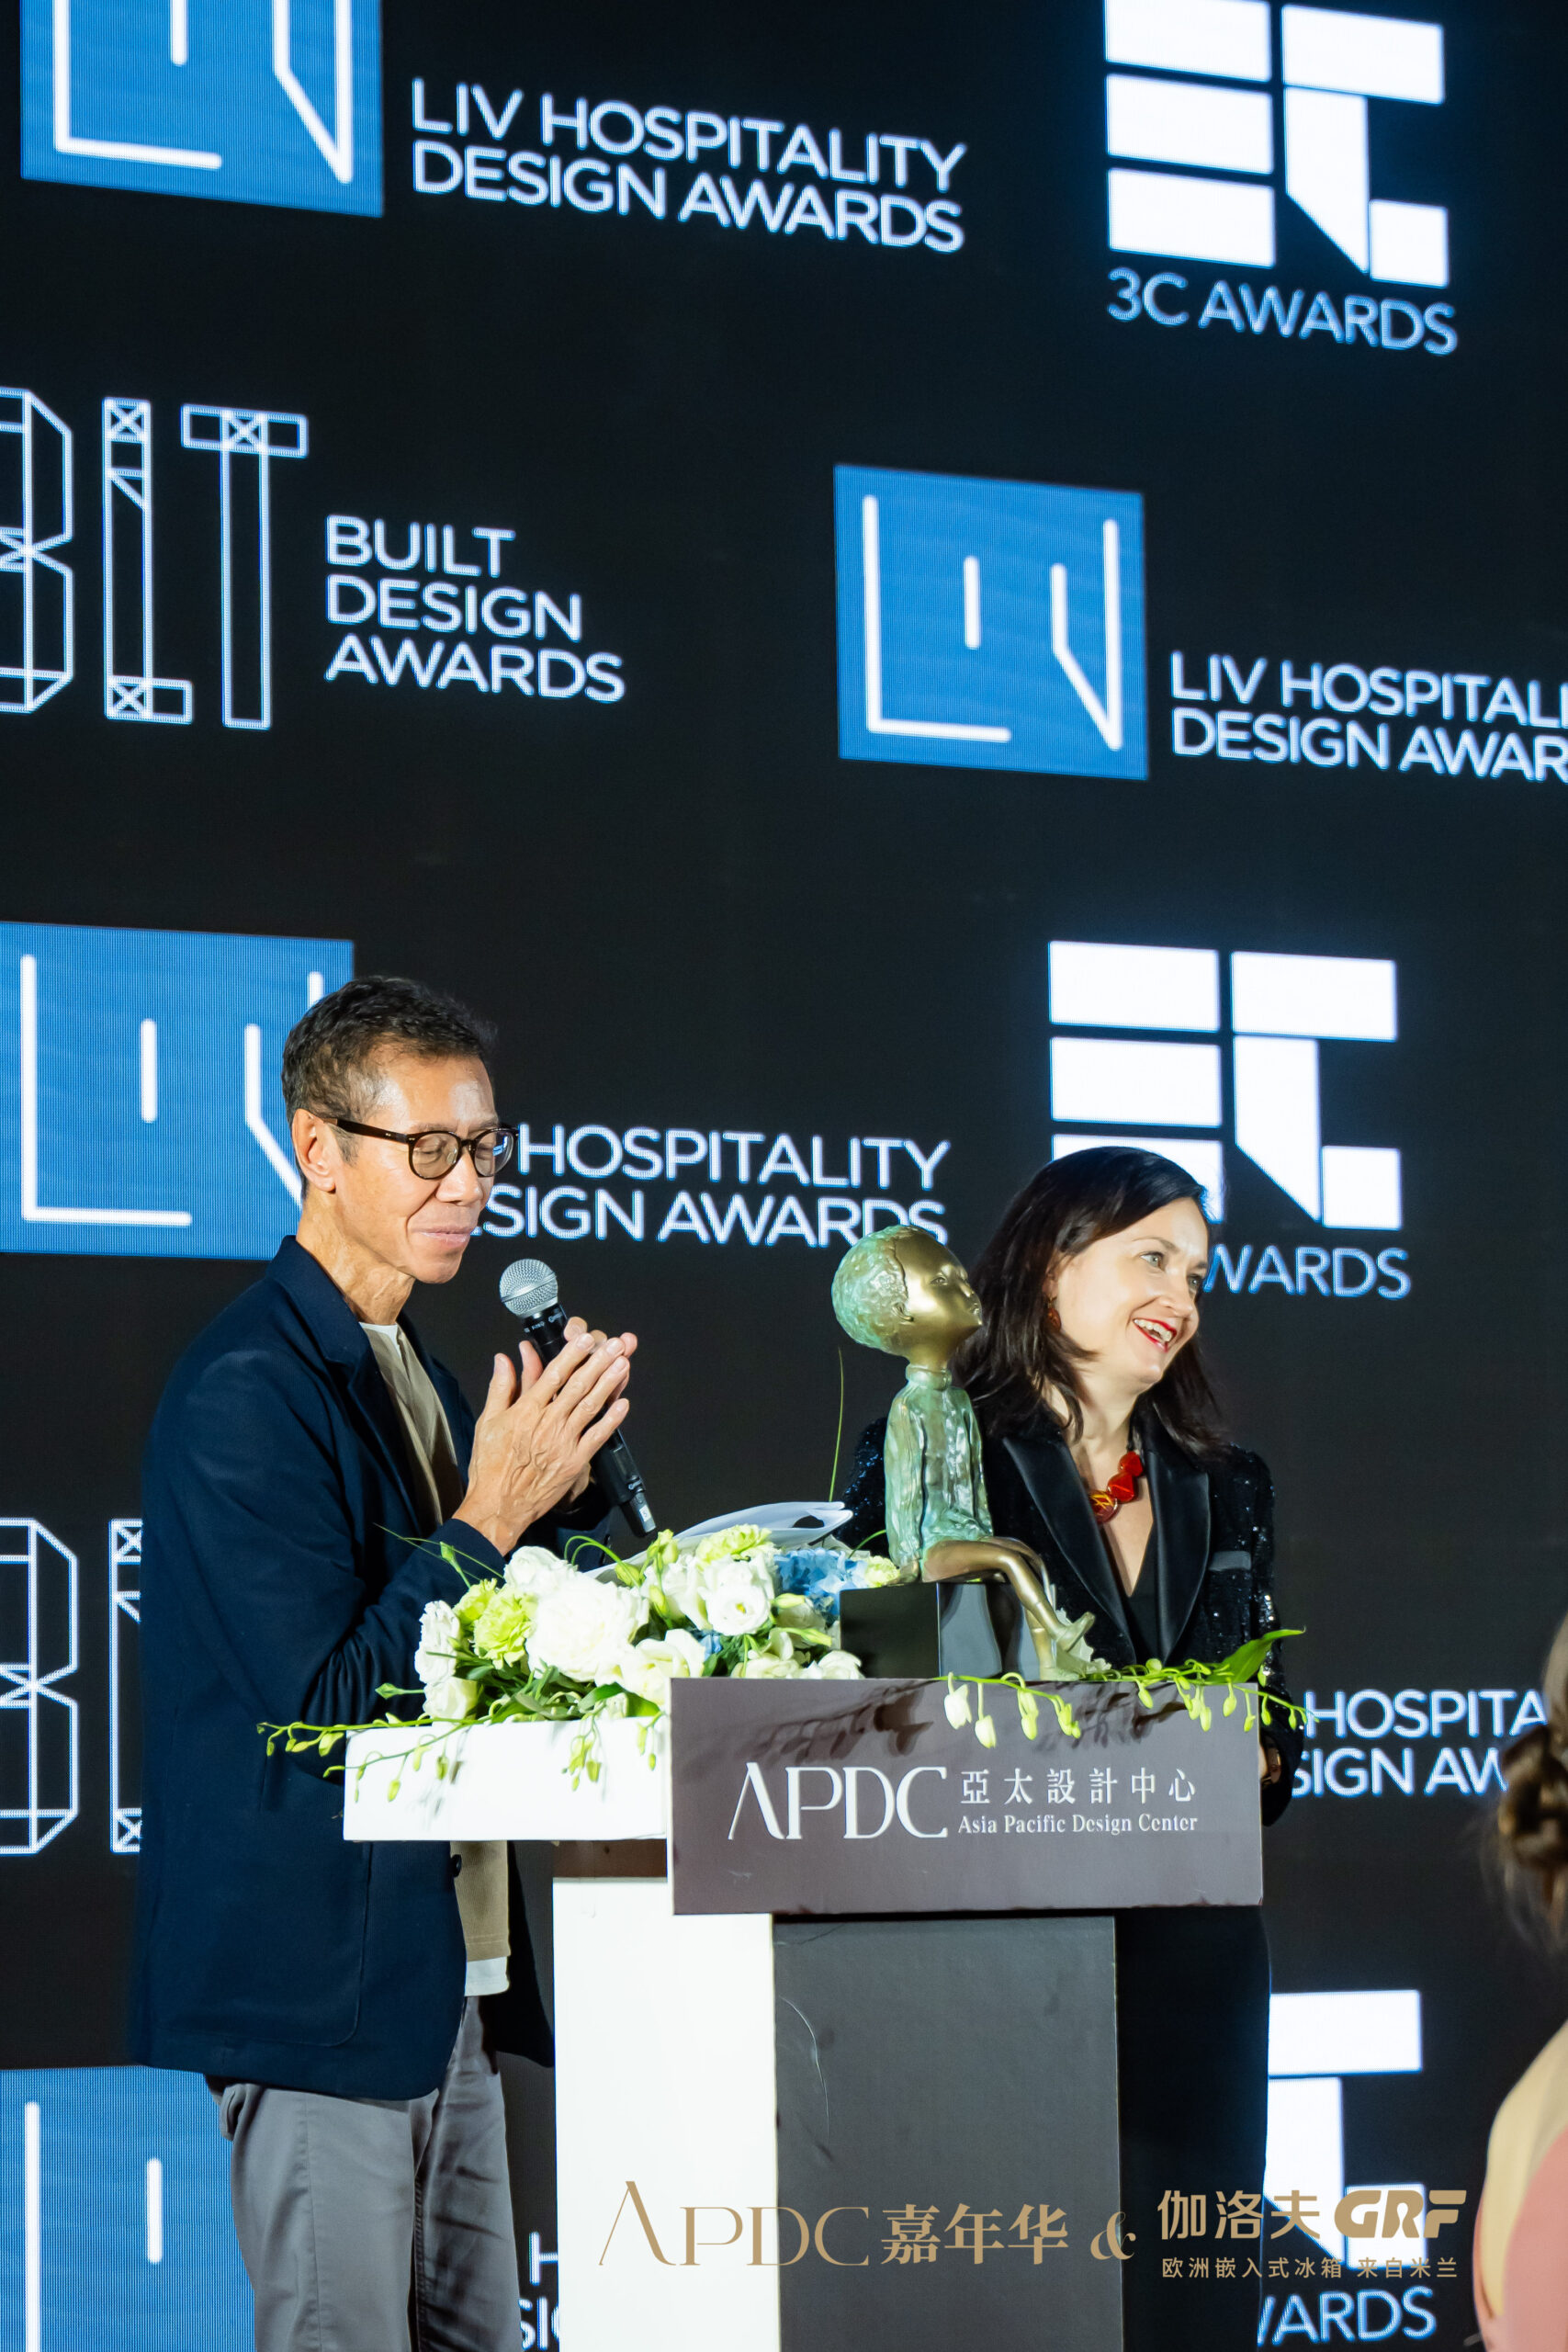 2023 BLT Built Design Award Winners Shine at Asia Pacific Design Center (APDC) Awards Event